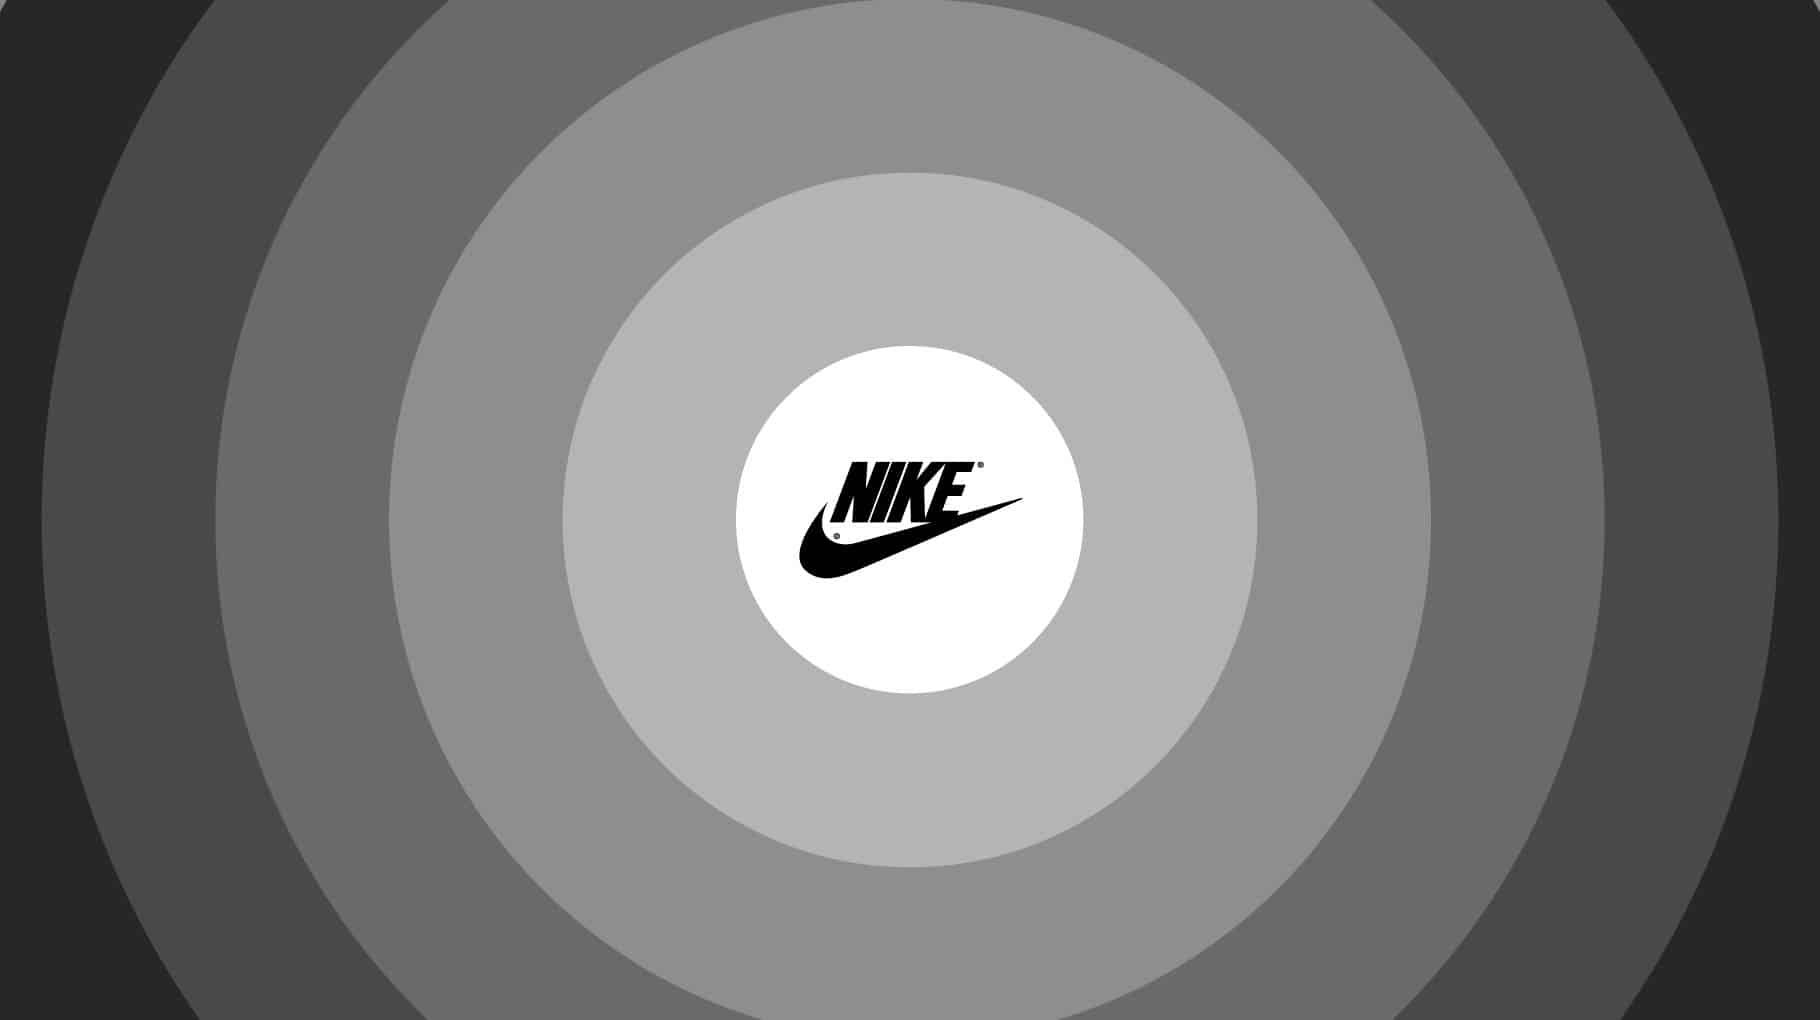 Hurley International Logo Clothing Nike Brand, brand, trademark